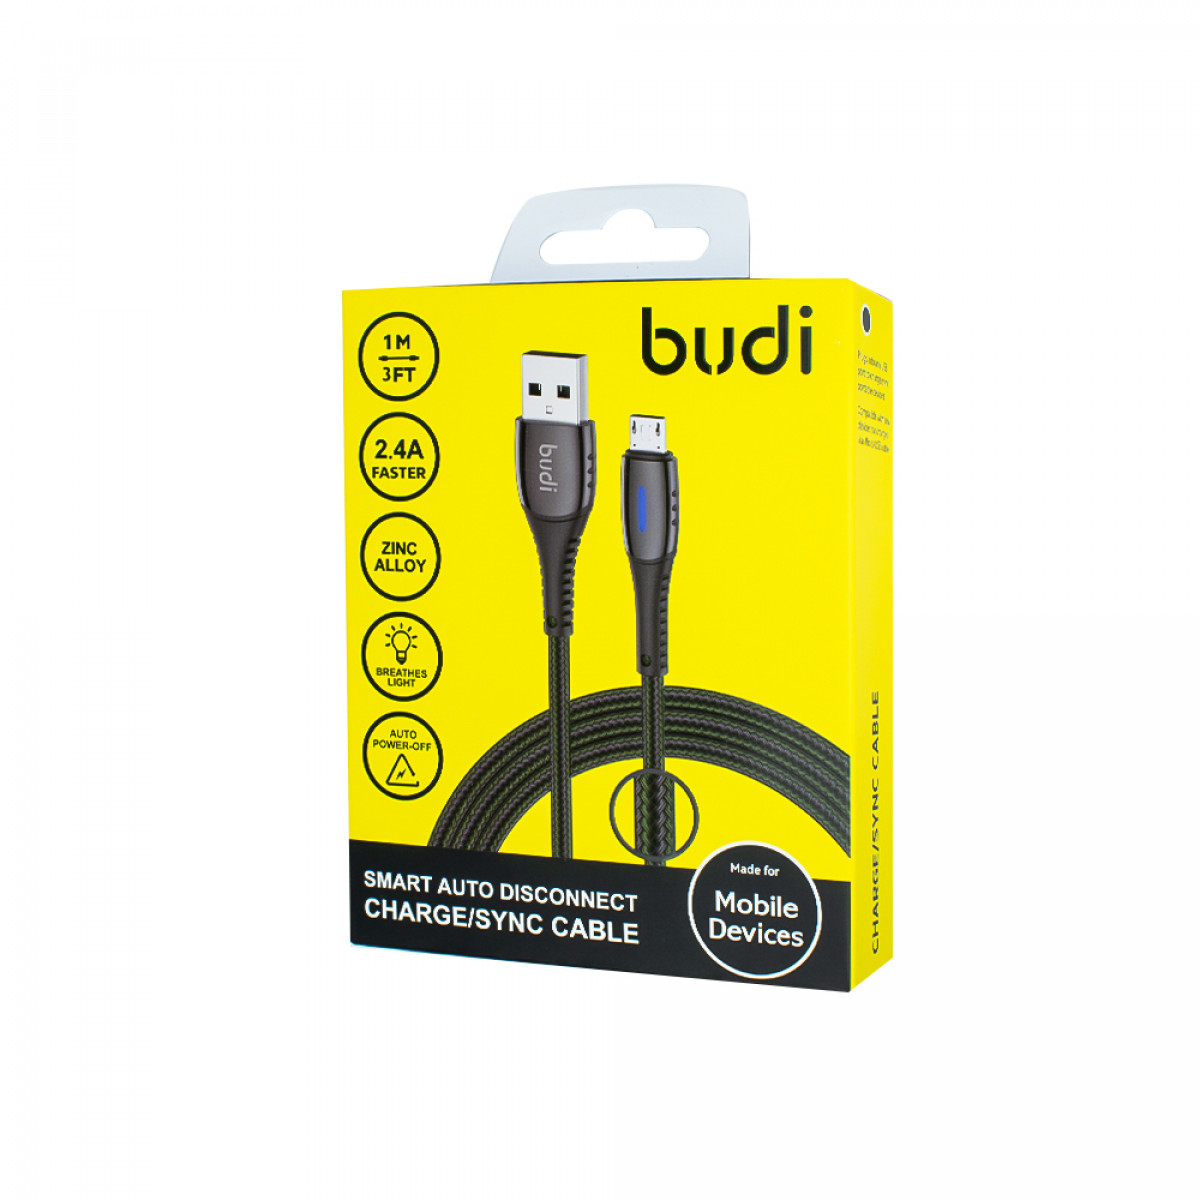 M8J212M - USB-кабель Budi Micro USB to USB Charge/Sync 1м,Auto power-off